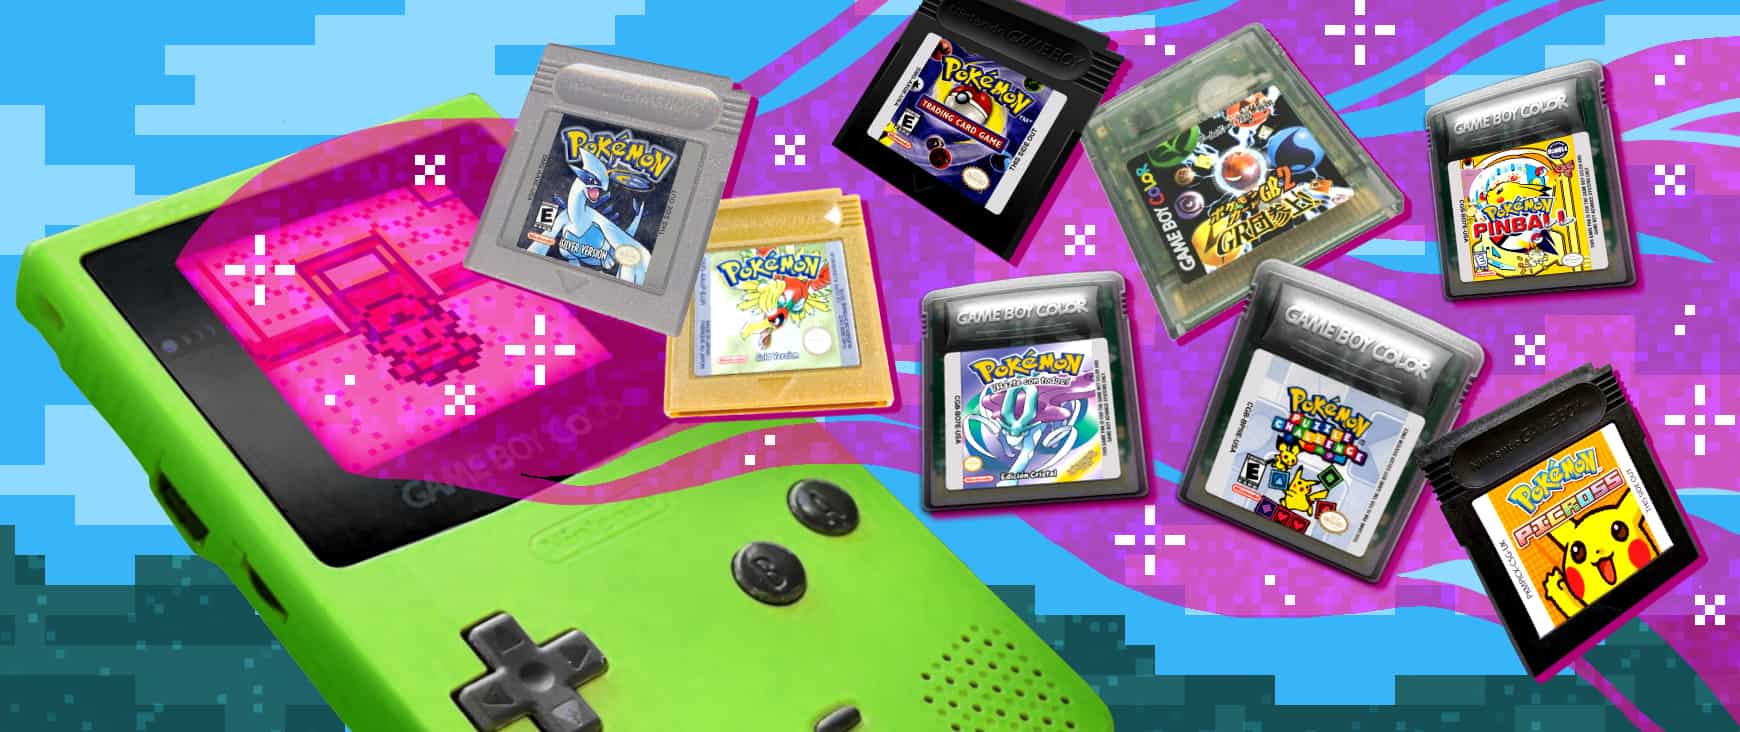 All 6 Pokémon Game Boy Color games